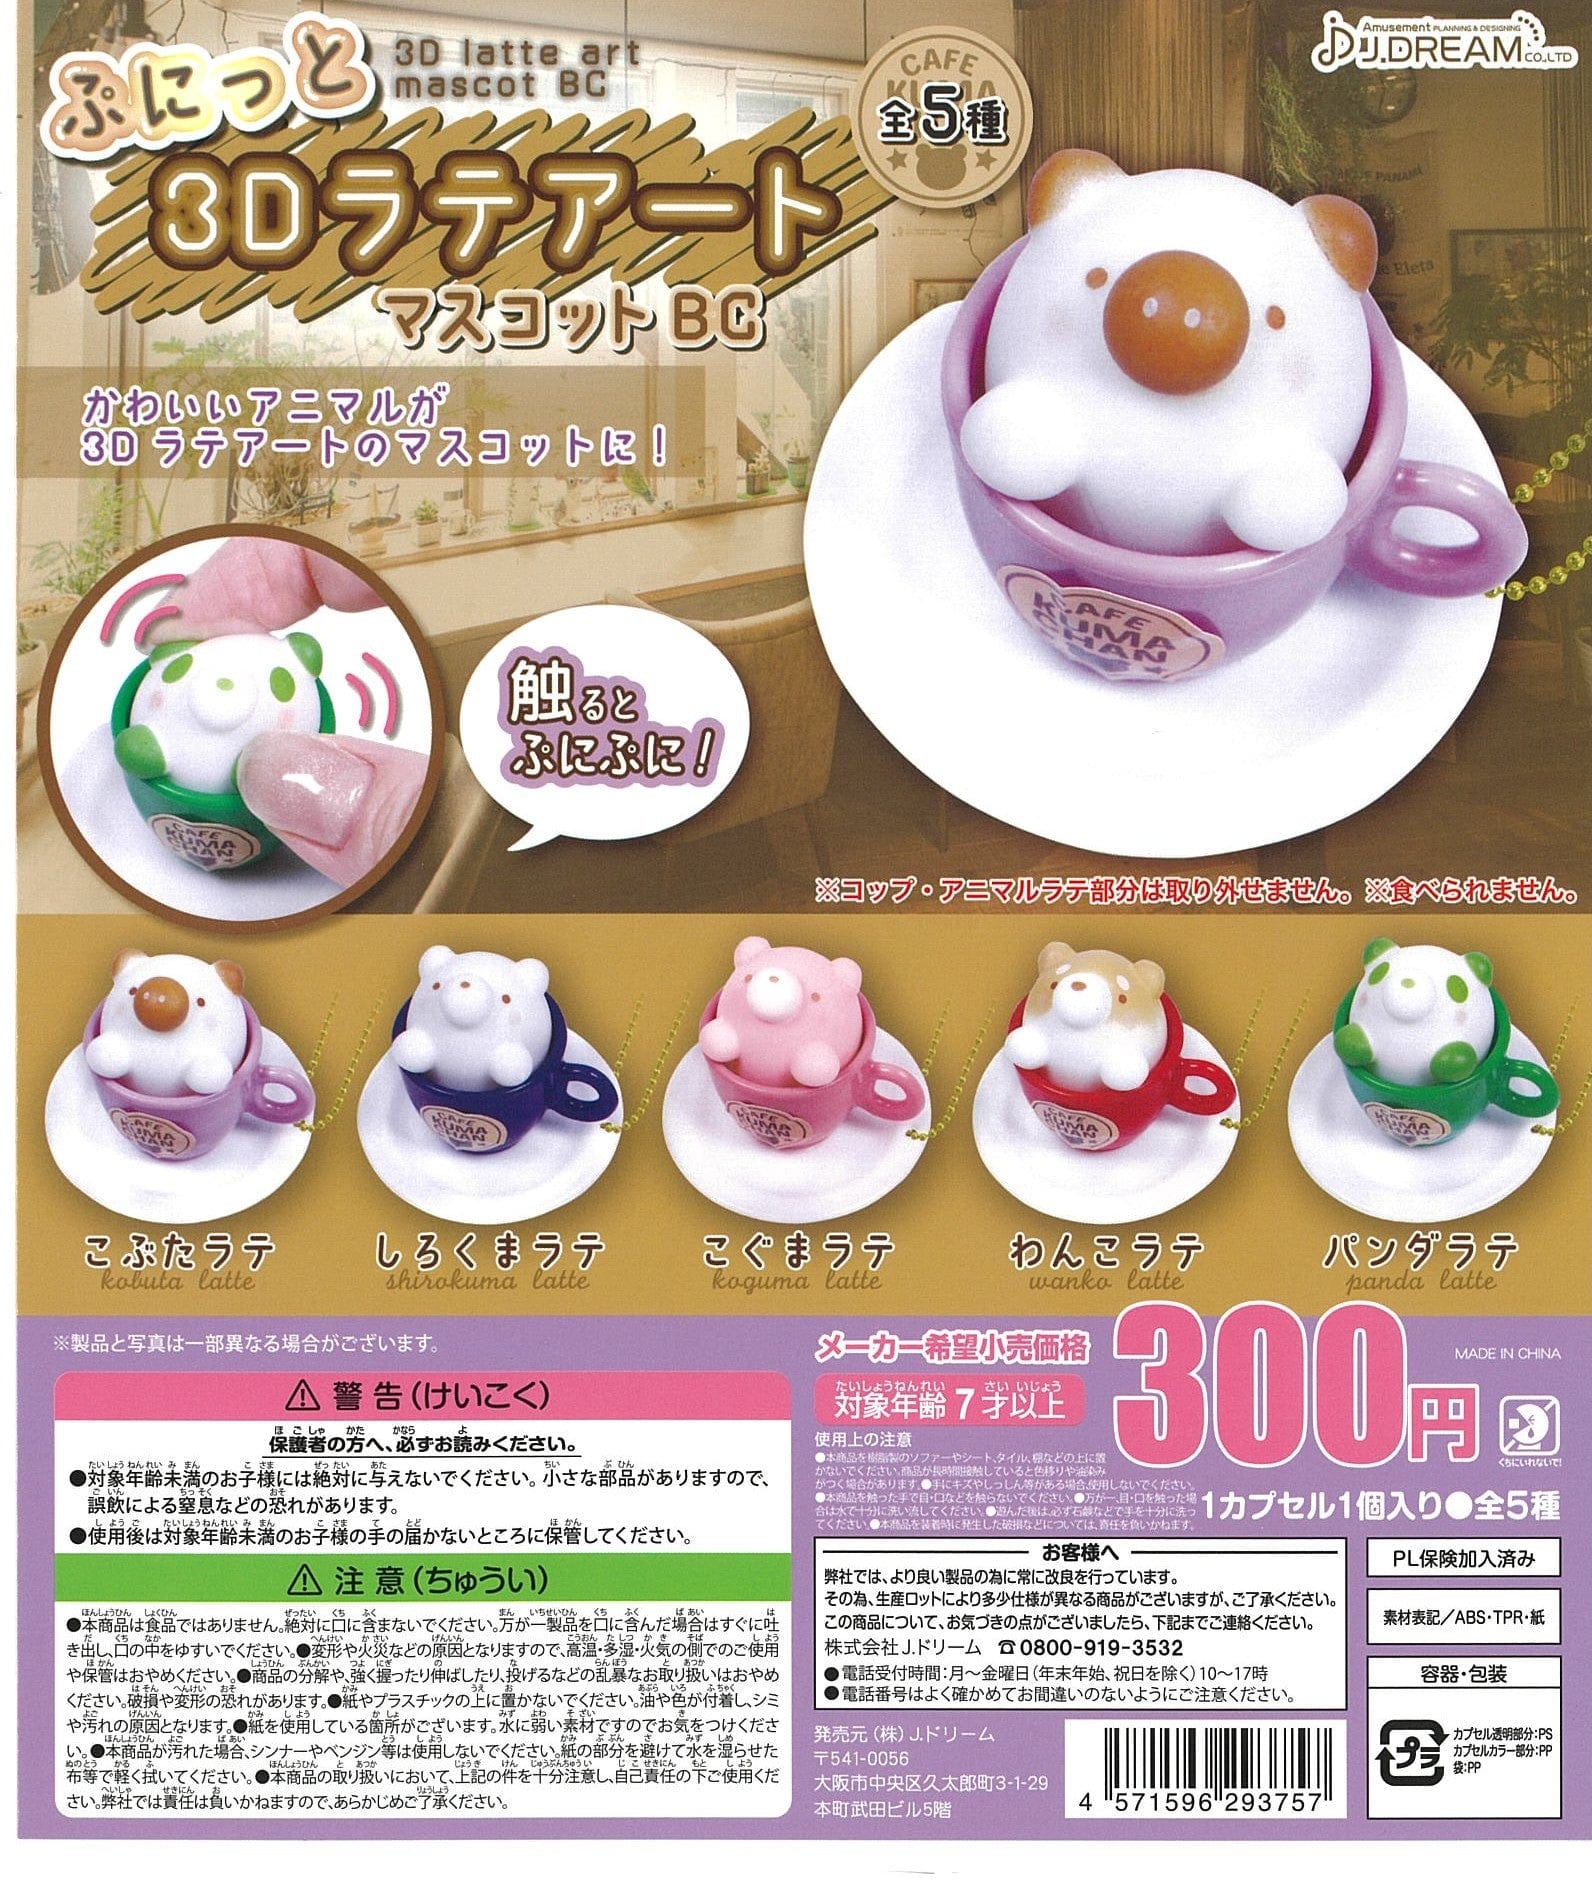 J.DREAM CP2300 Punitto 3D Latte Art Mascot Ball Chain